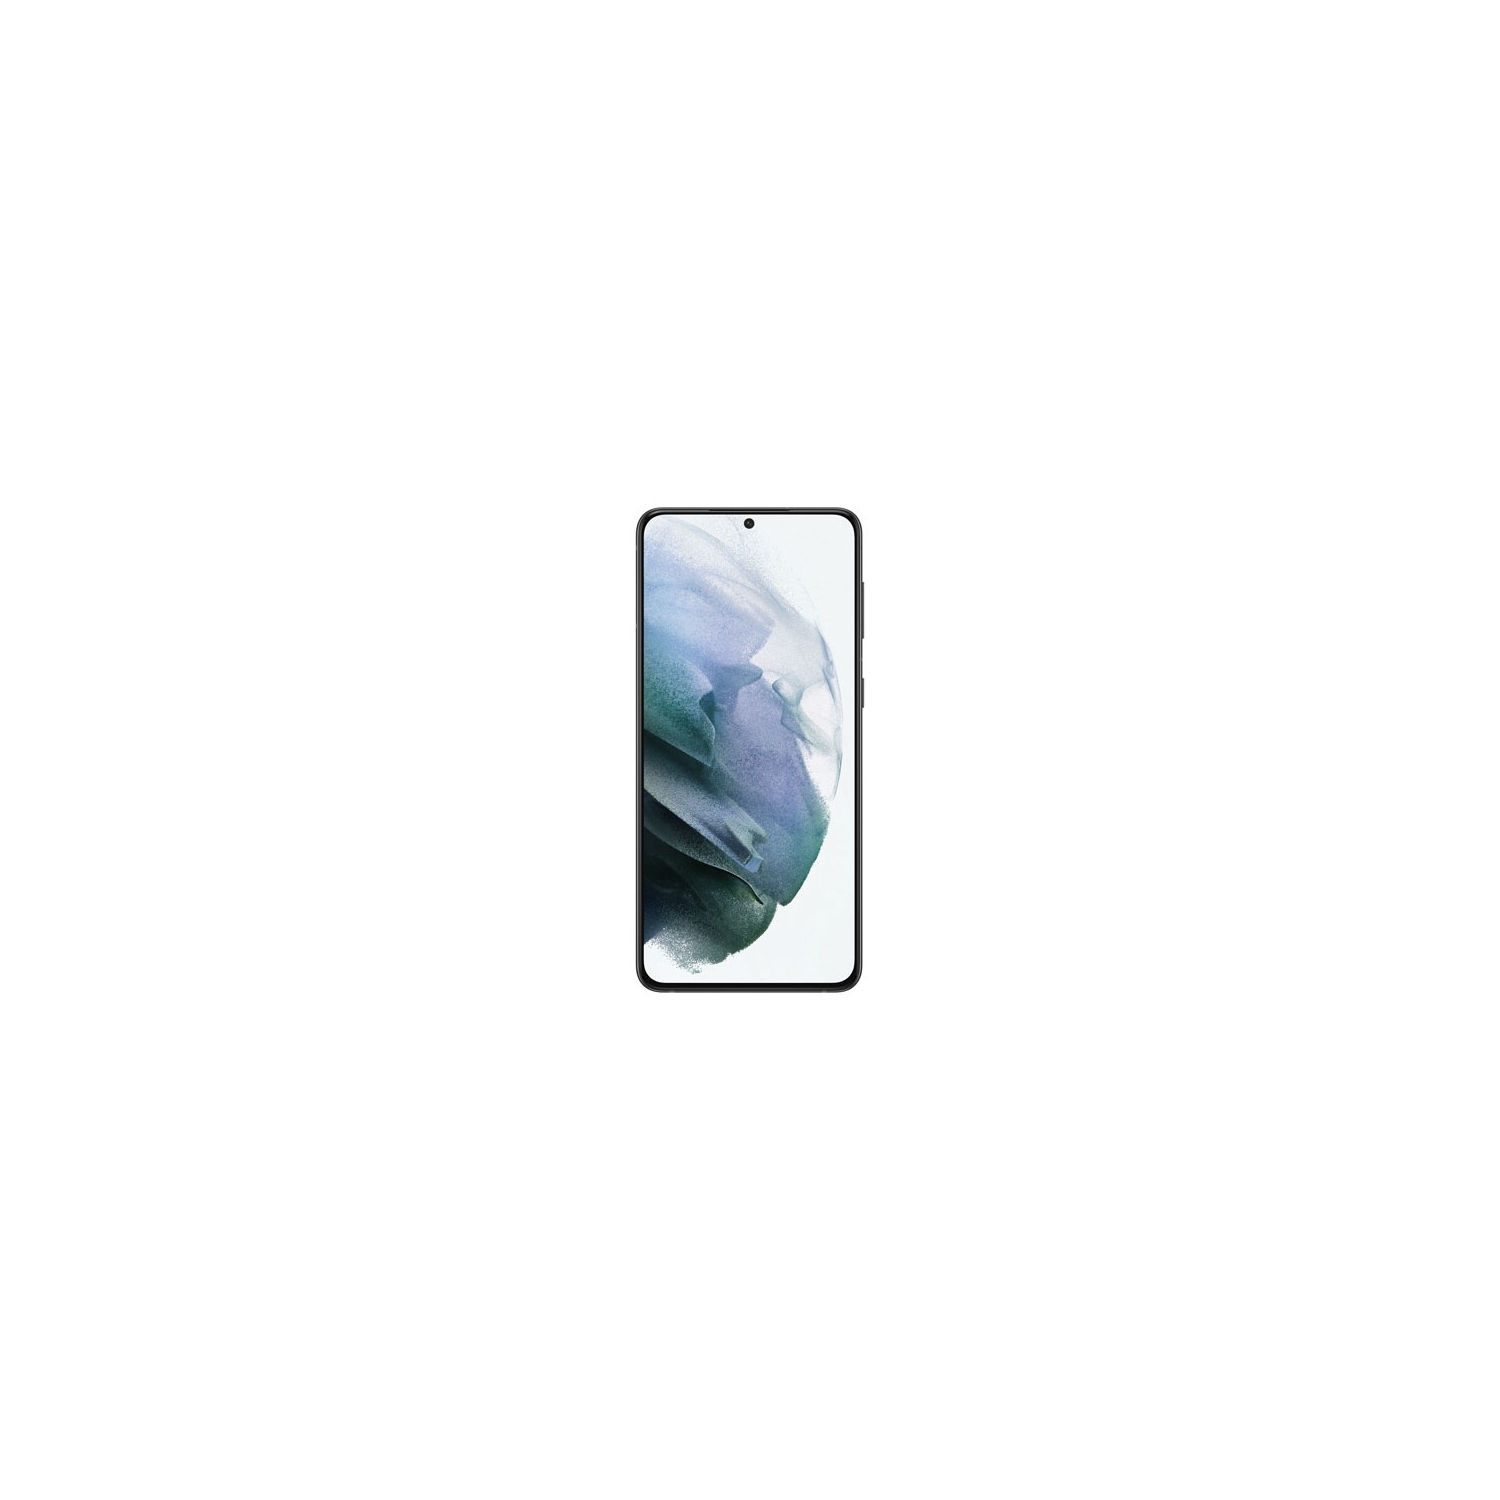 Samsung Galaxy S21+ 128GB Smartphone - Phantom Black - Unlocked - Open Box